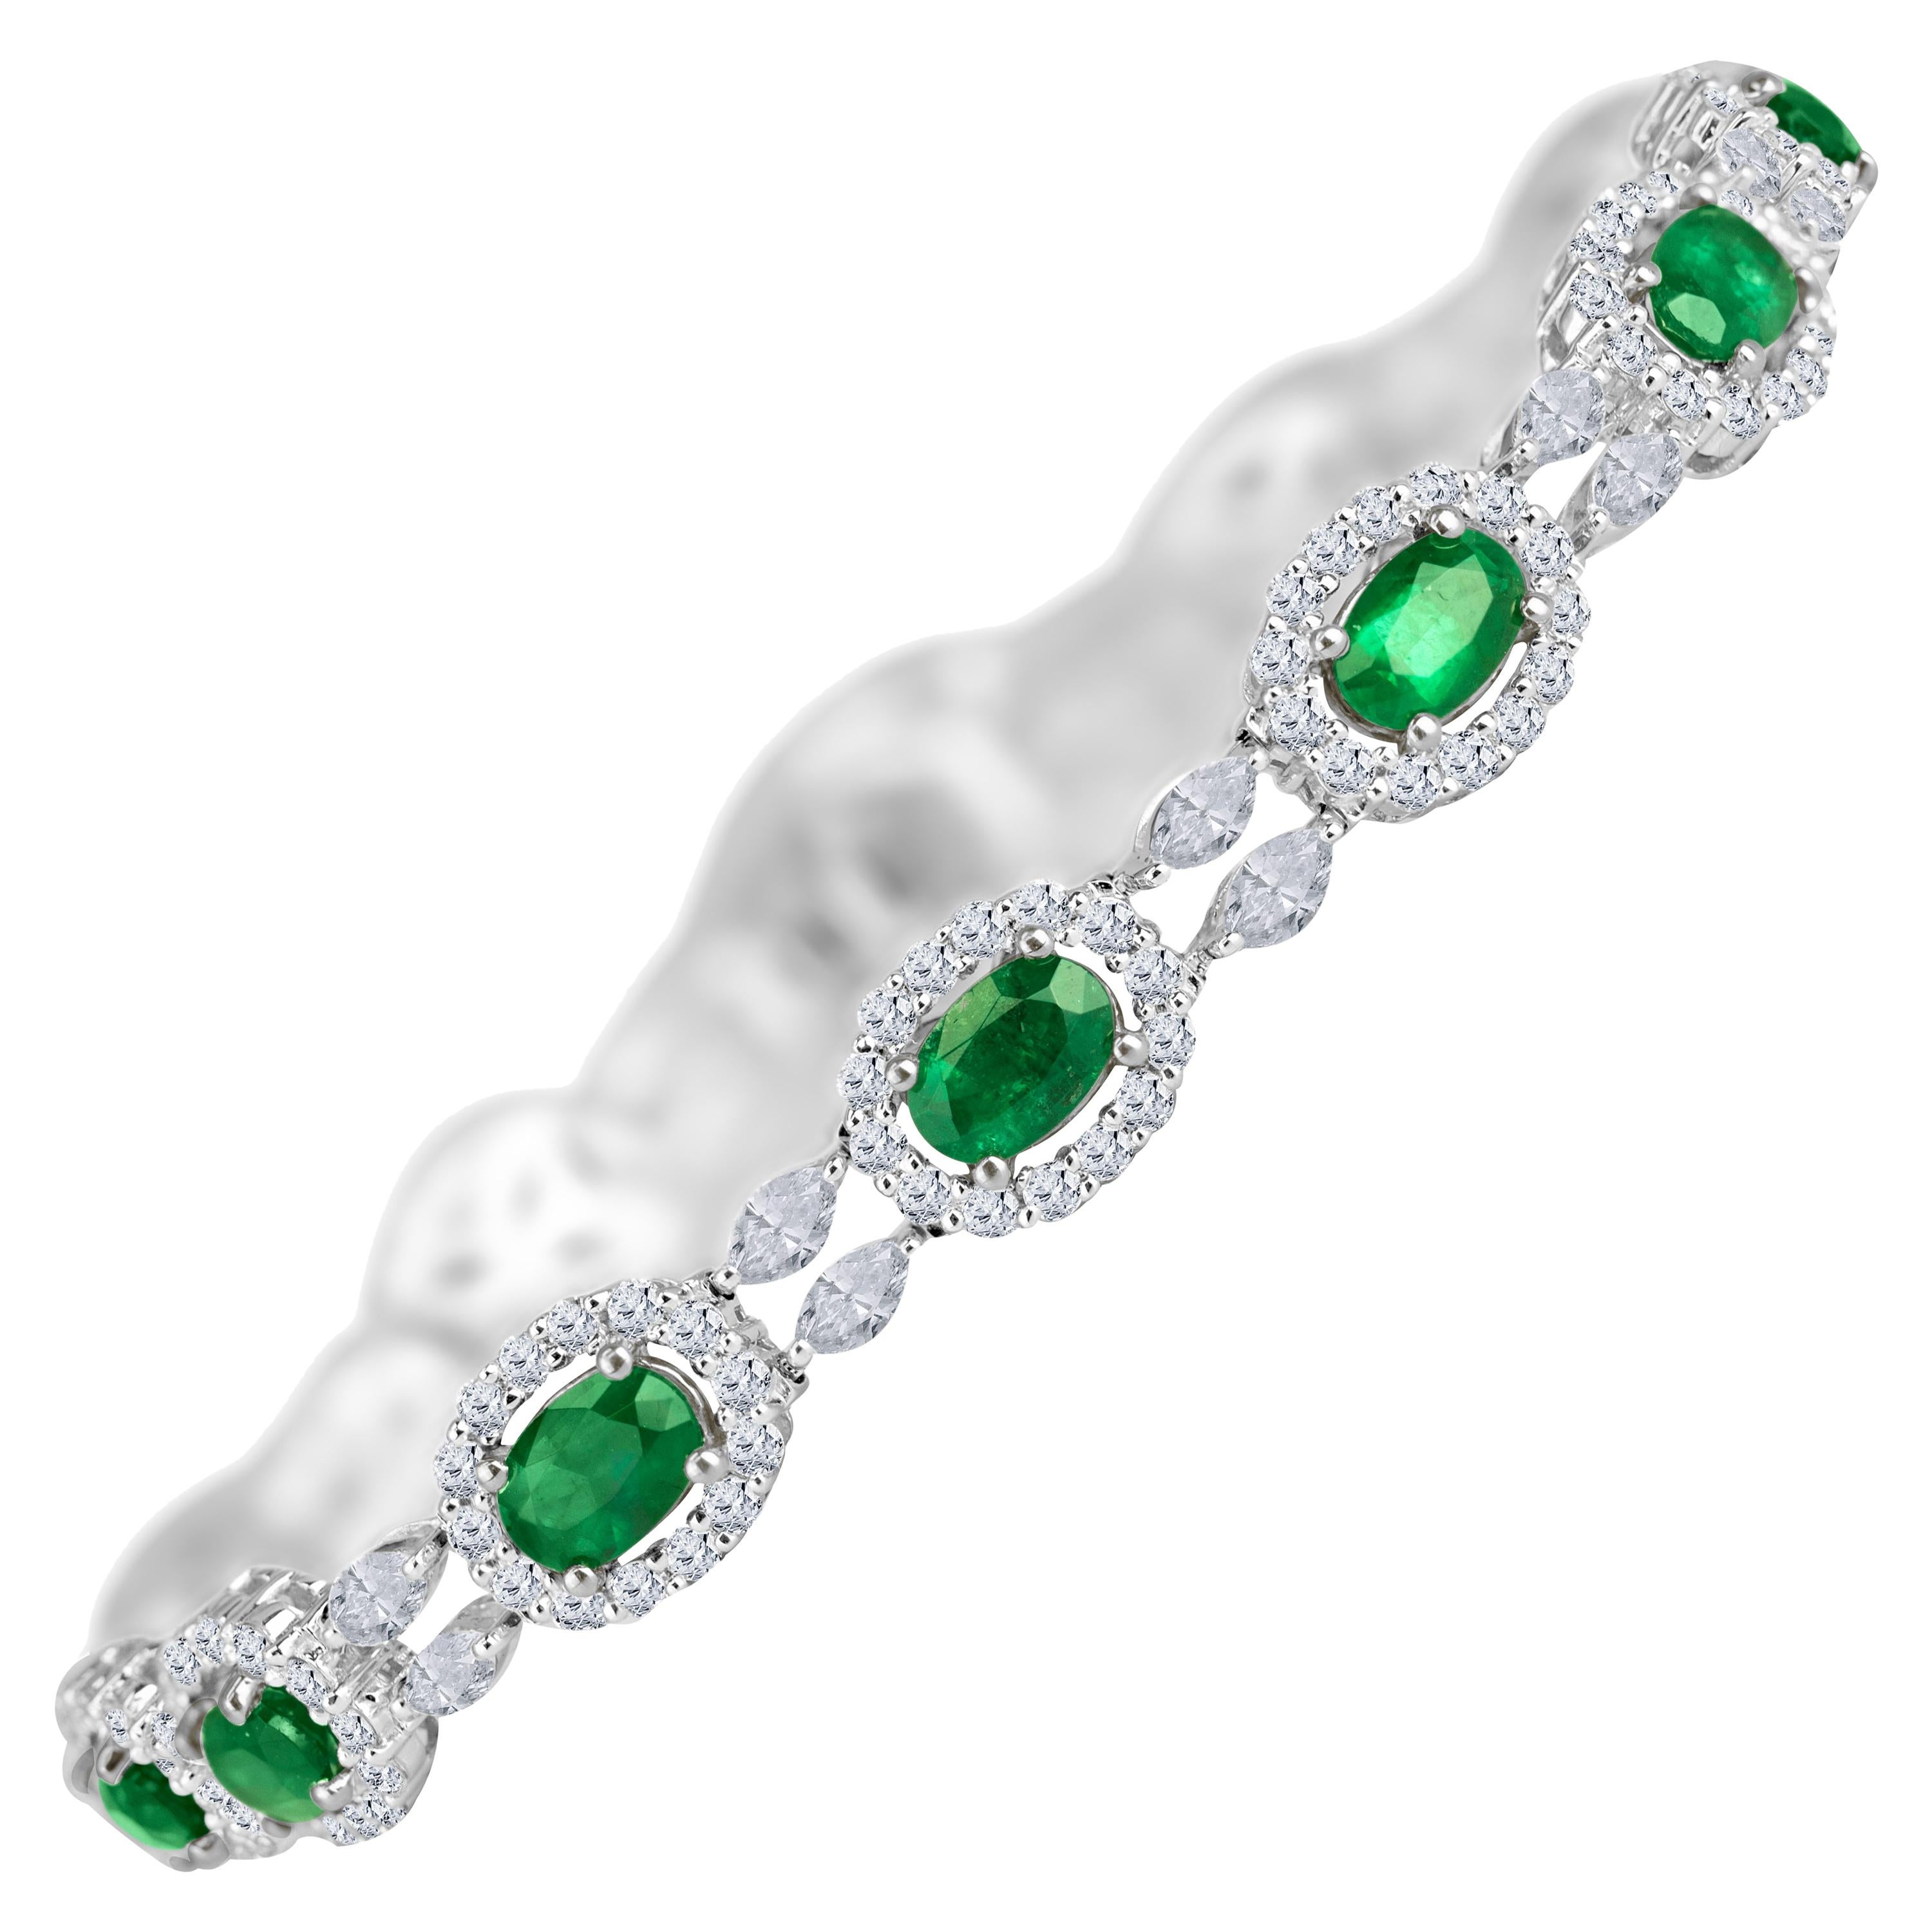 DiamondTown 6.25 Carat Oval Cut Emerald and Diamond Bracelet in 18k White Gold